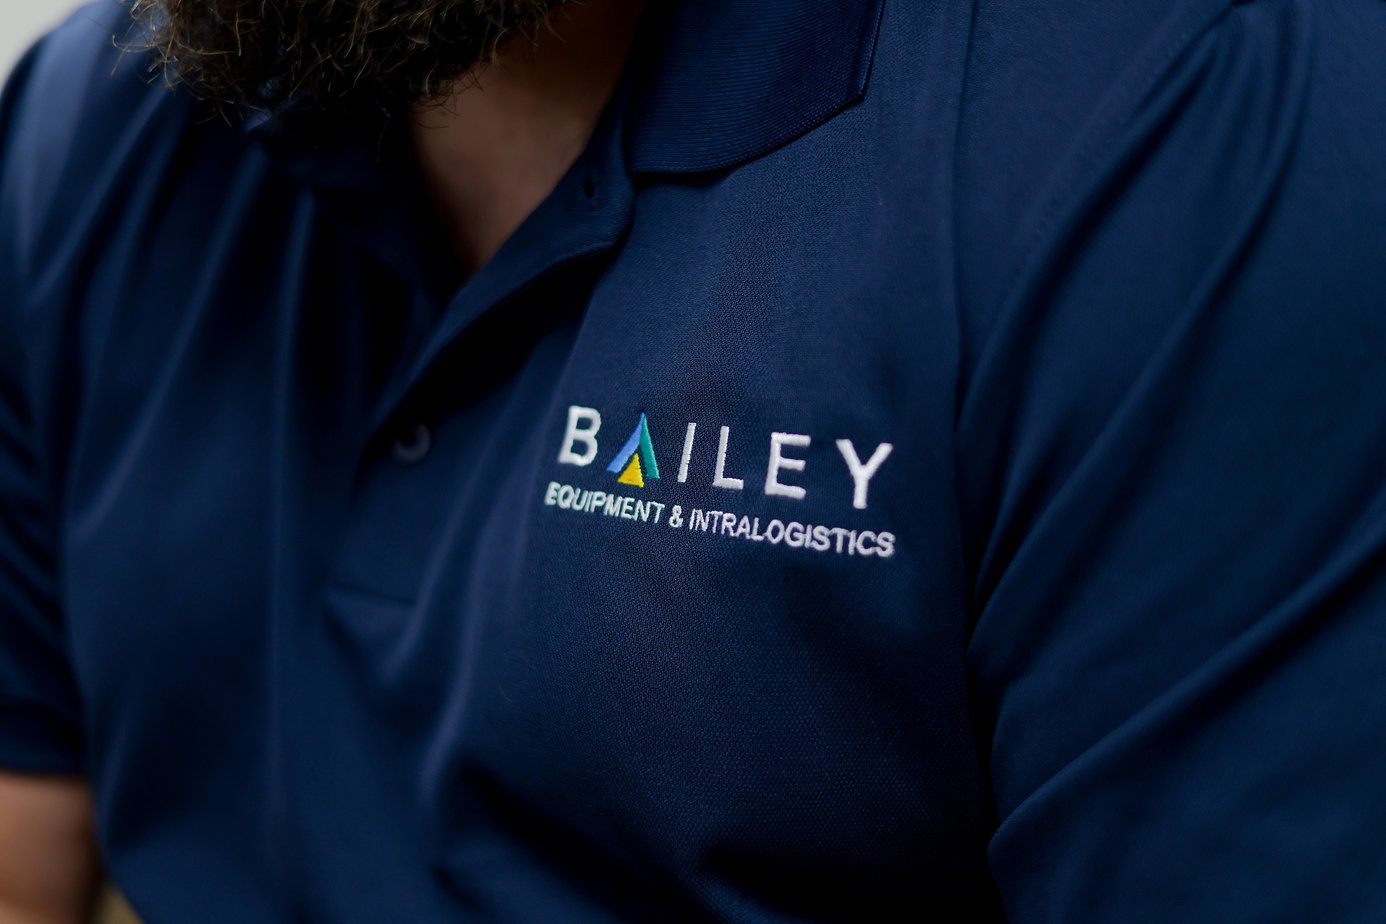 Bailey Company Logo on Shirt